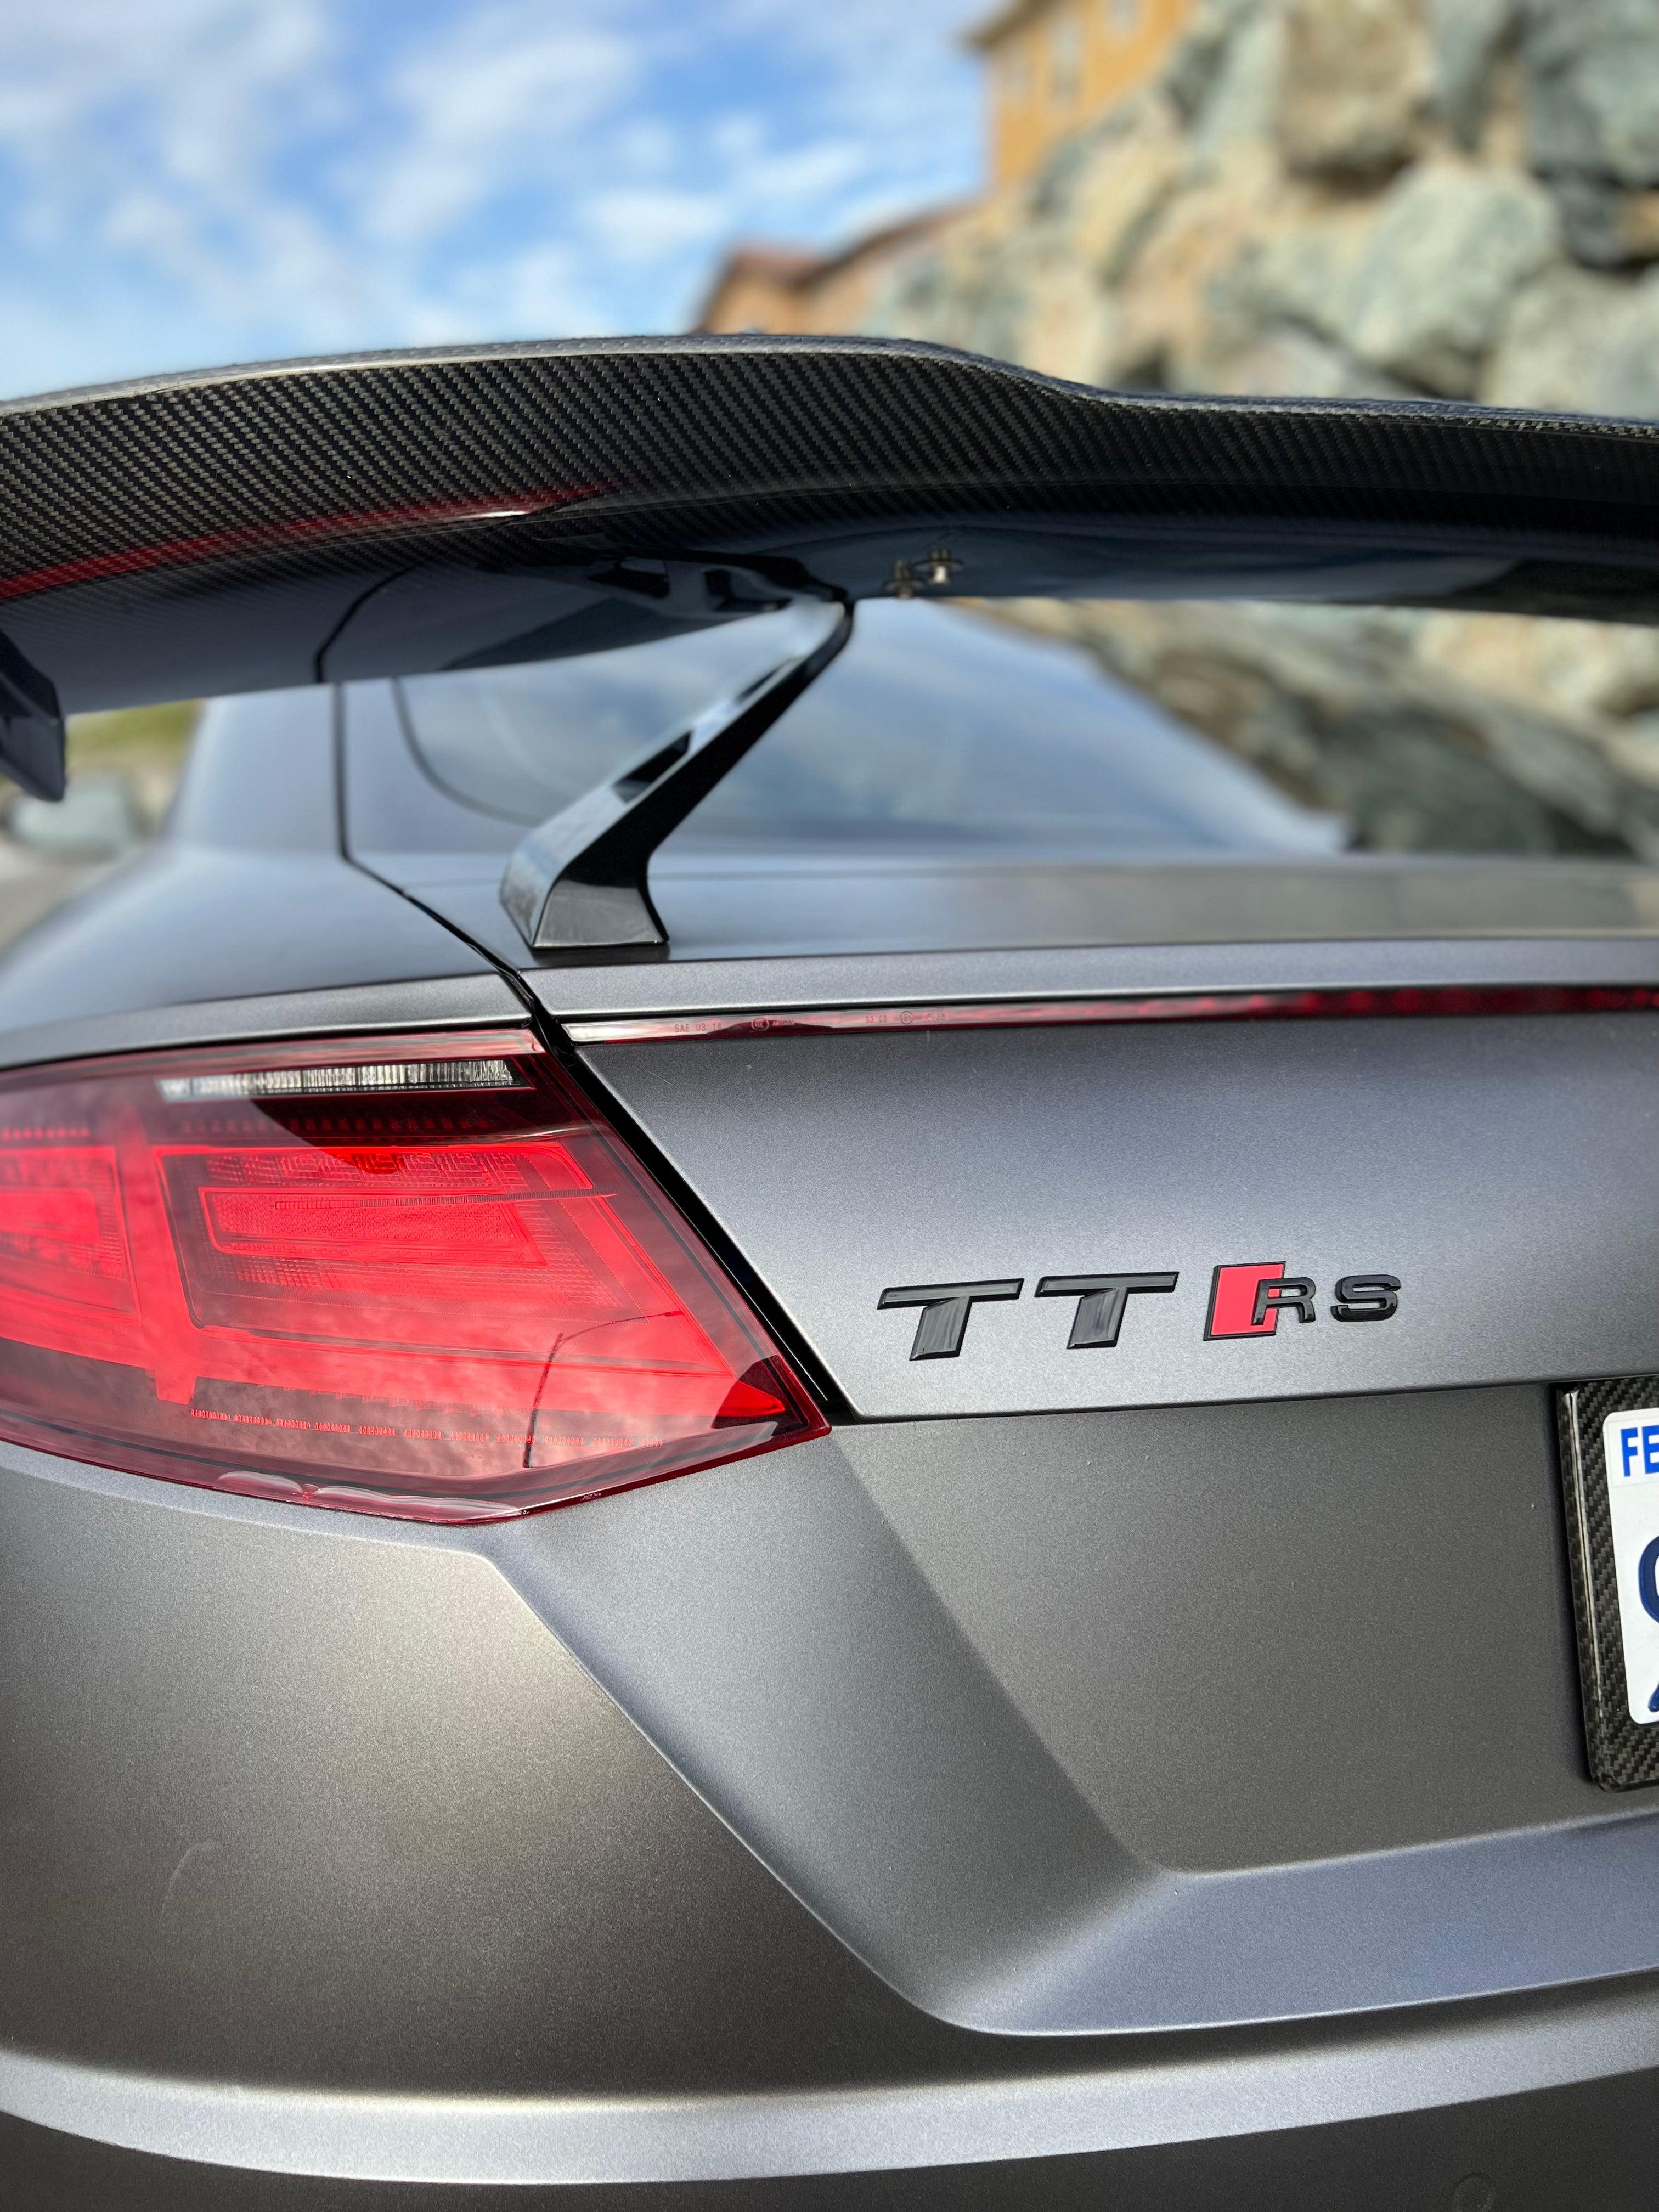 AUDI TTRS BLACK Hood & Trunk Ring Emblem S Line quattro Logo Badge Kit –  Automotive Gem